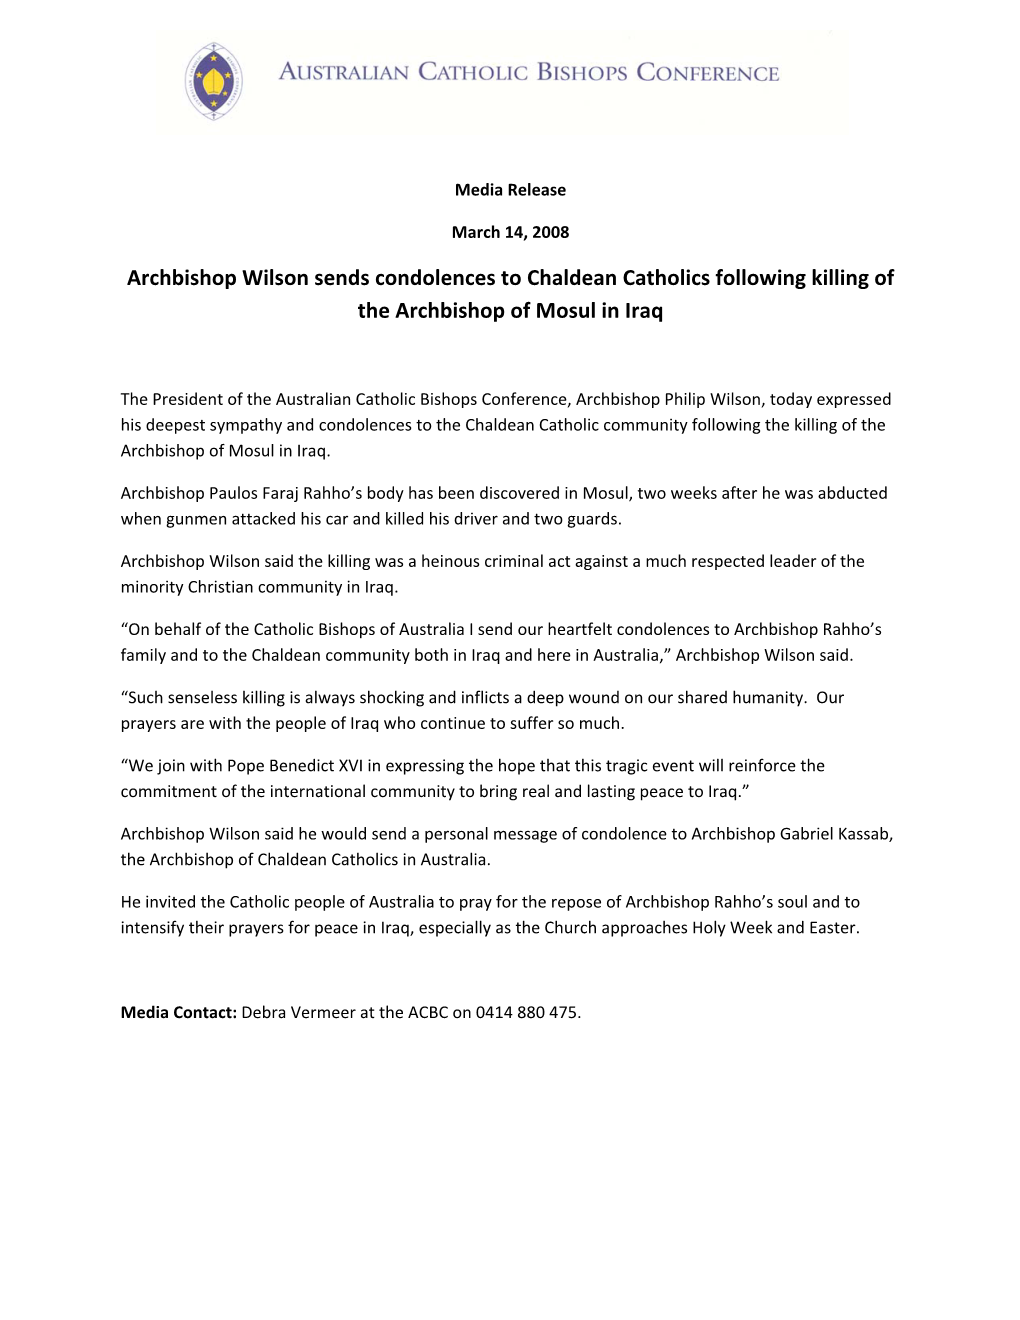 Archbishop Wilson Sends Condolences to Chaldean Catholics Following Killing of the Archbishop of Mosul in Iraq